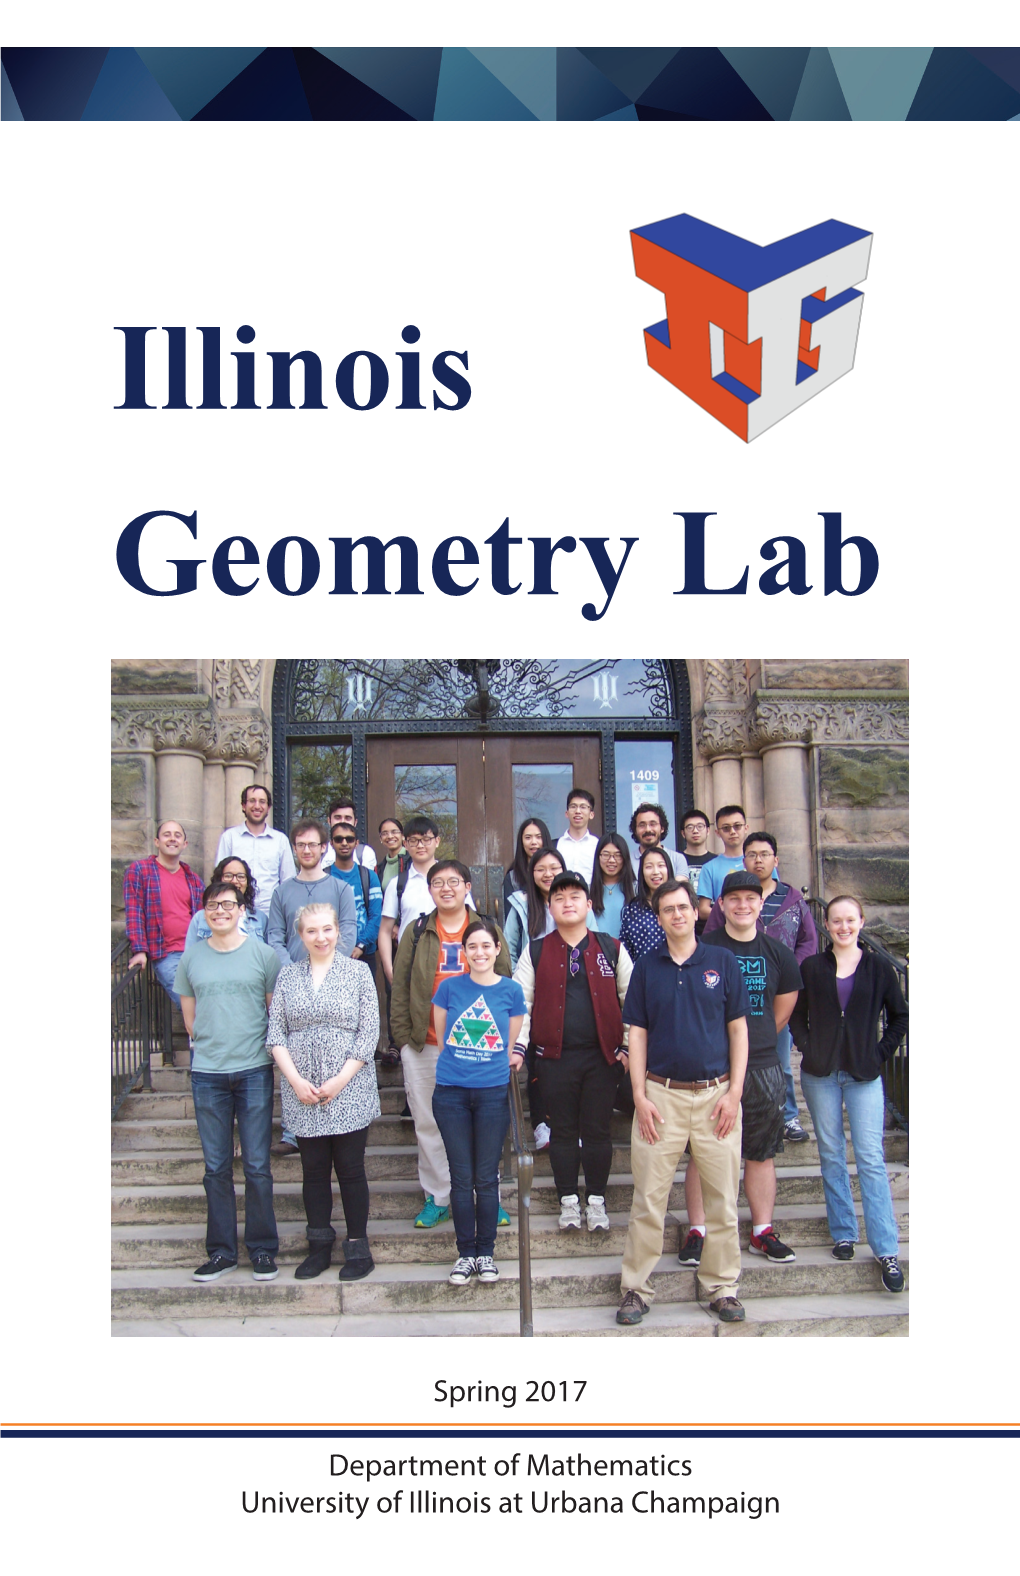 Illinois Geometry Lab